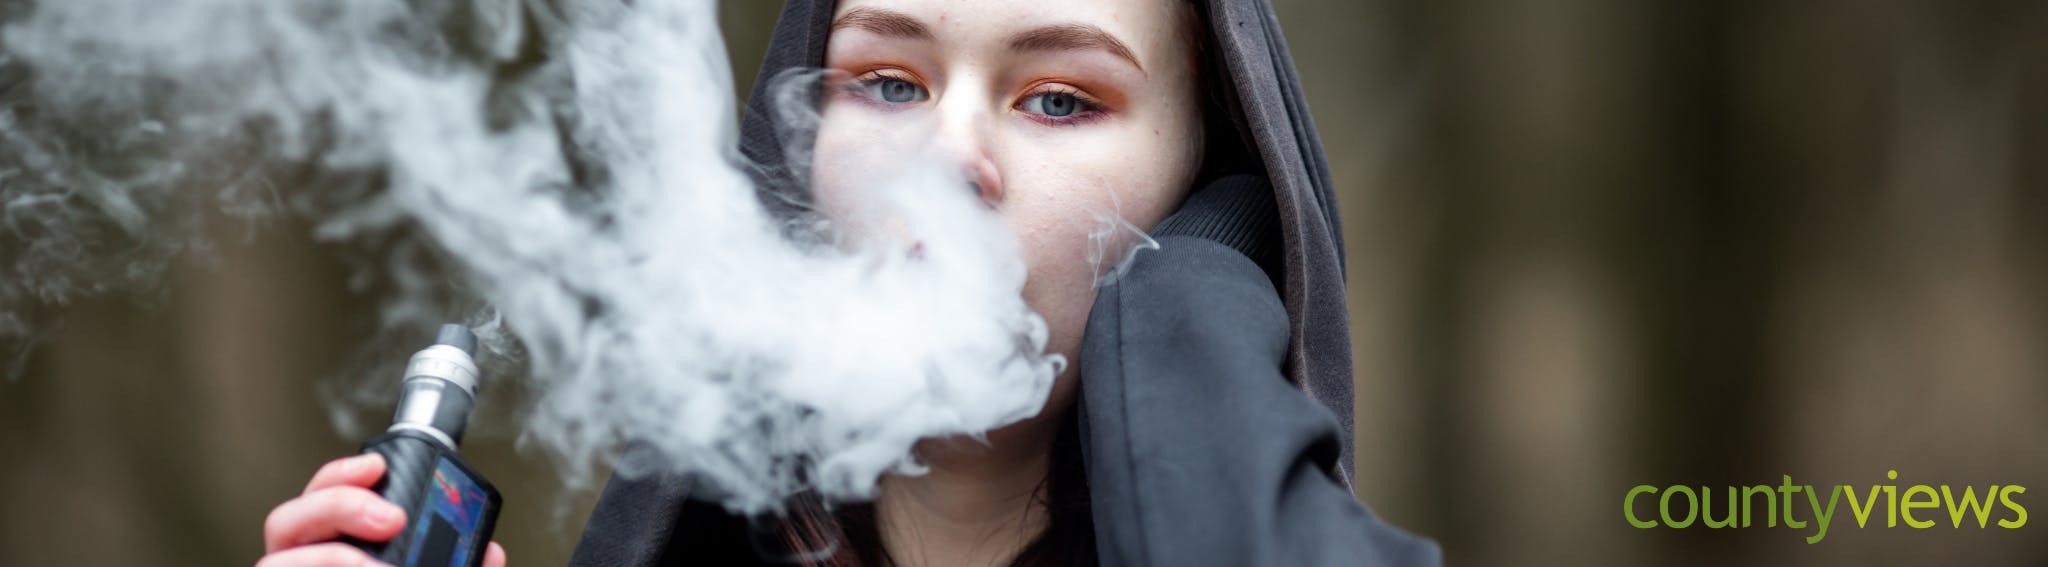 Young woman using an e-cigarette.